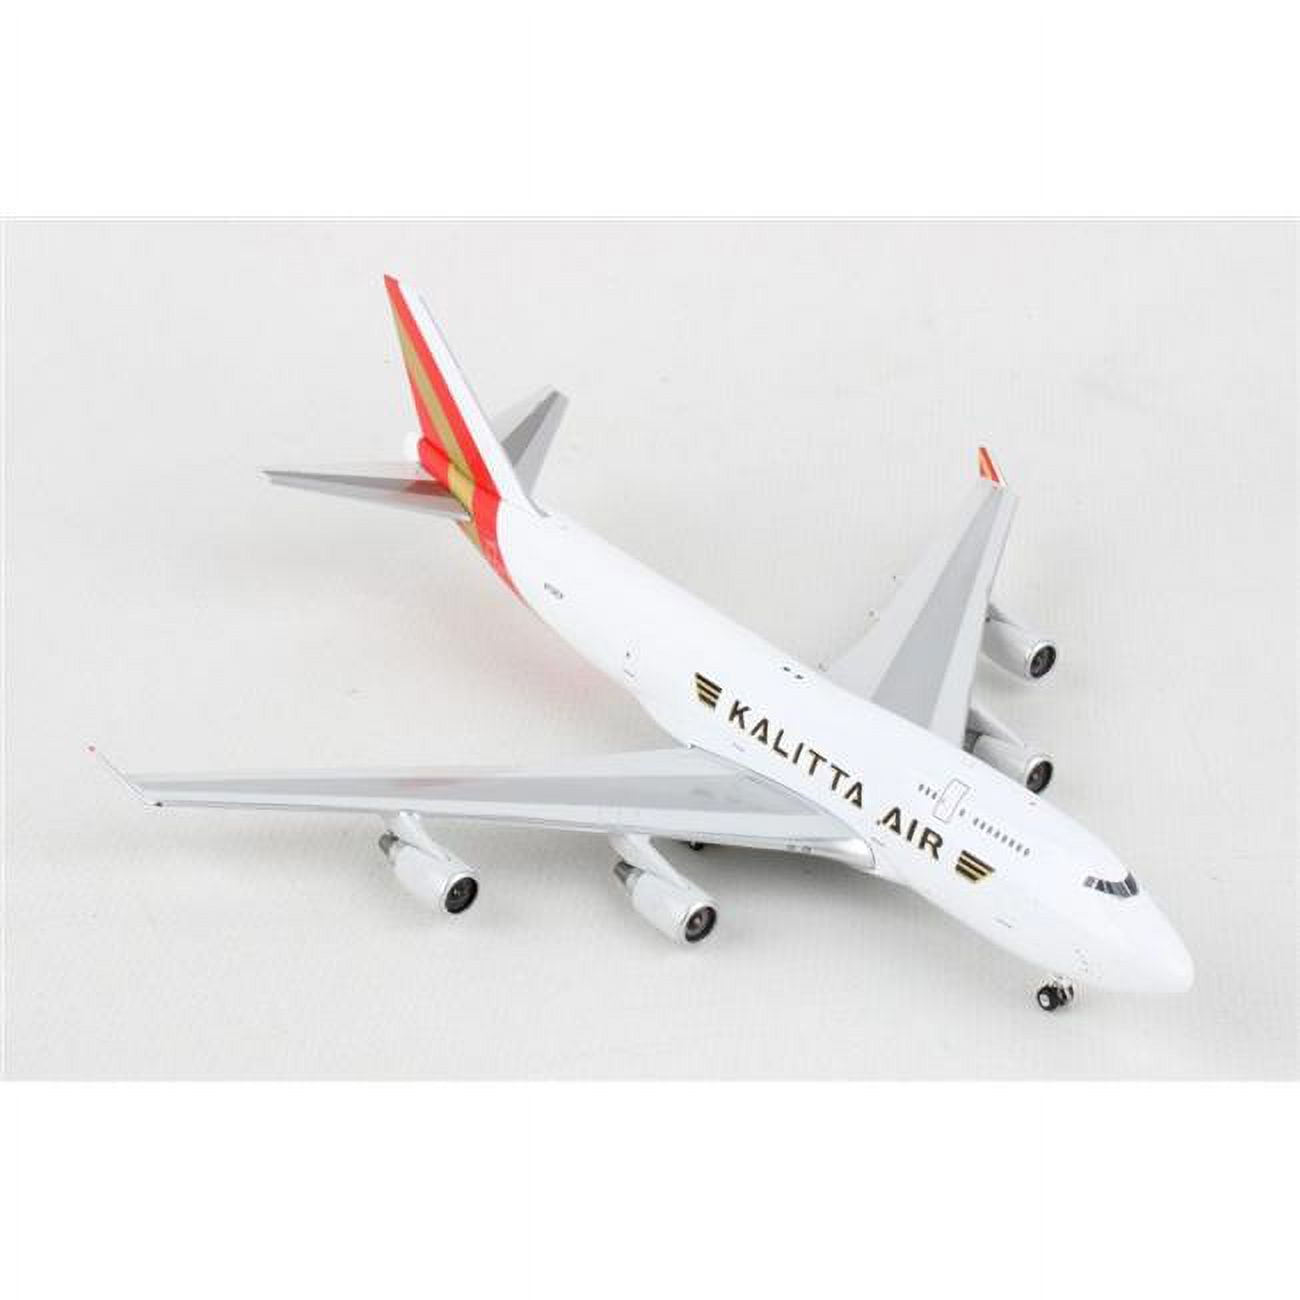 Picture of Phoenix PH2385 1-400 Scale Kalitta 747-400BCF Reg No.N708Ck Model Airplane